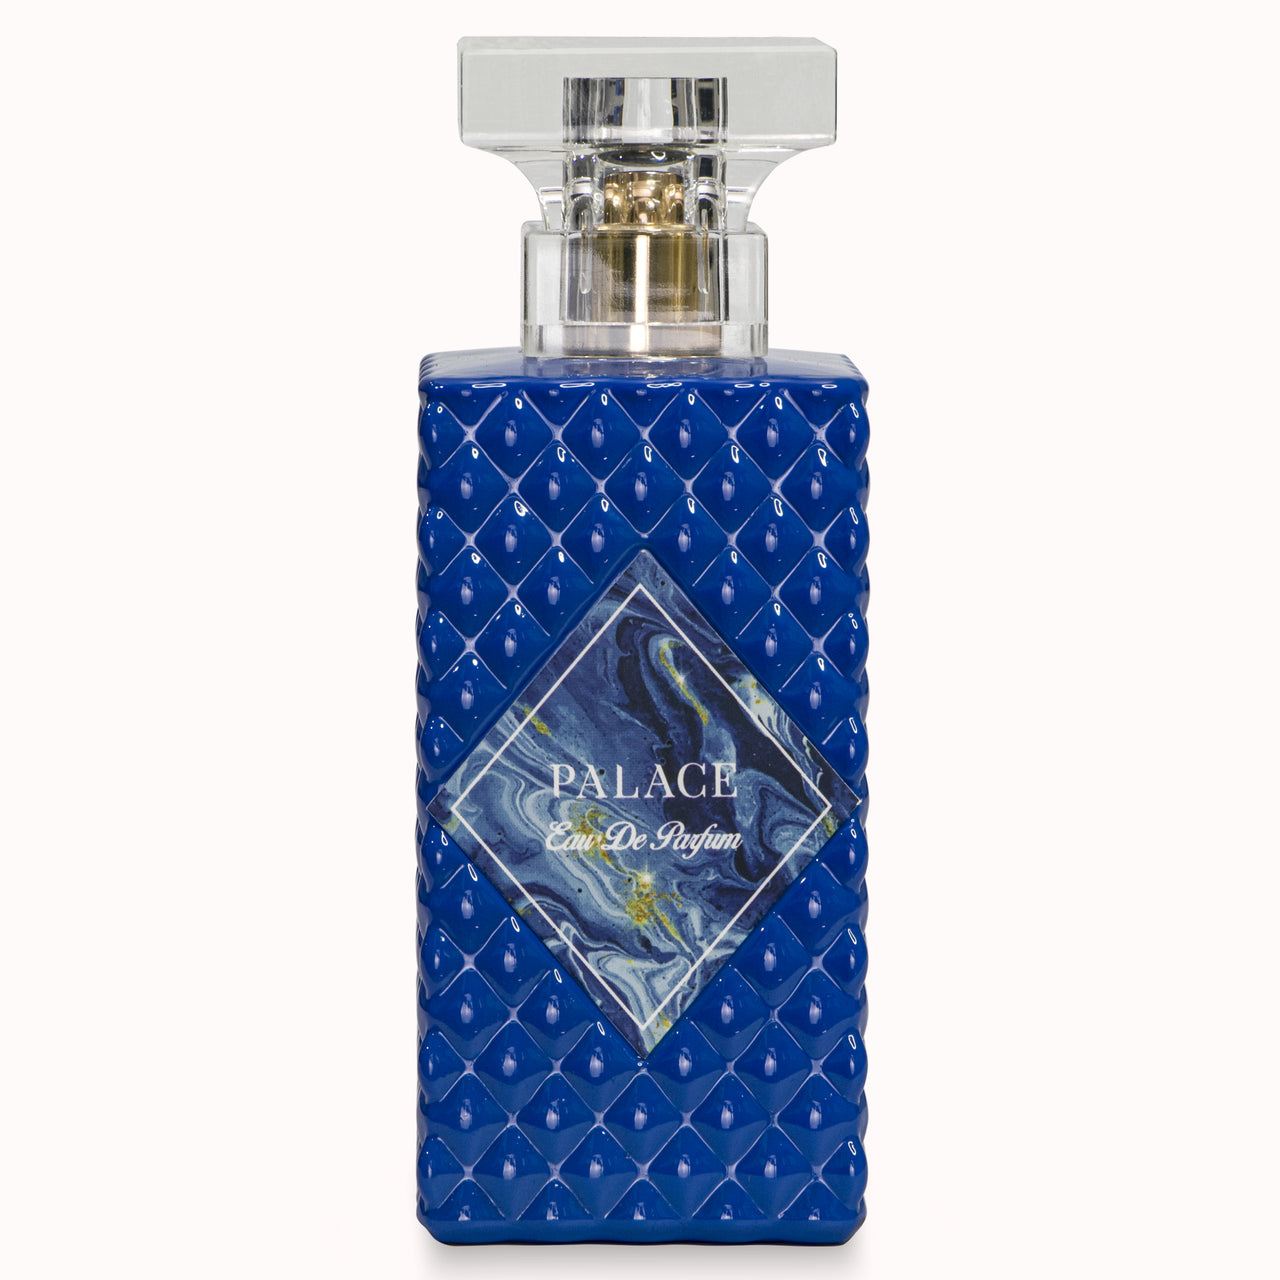 Palace Perfume